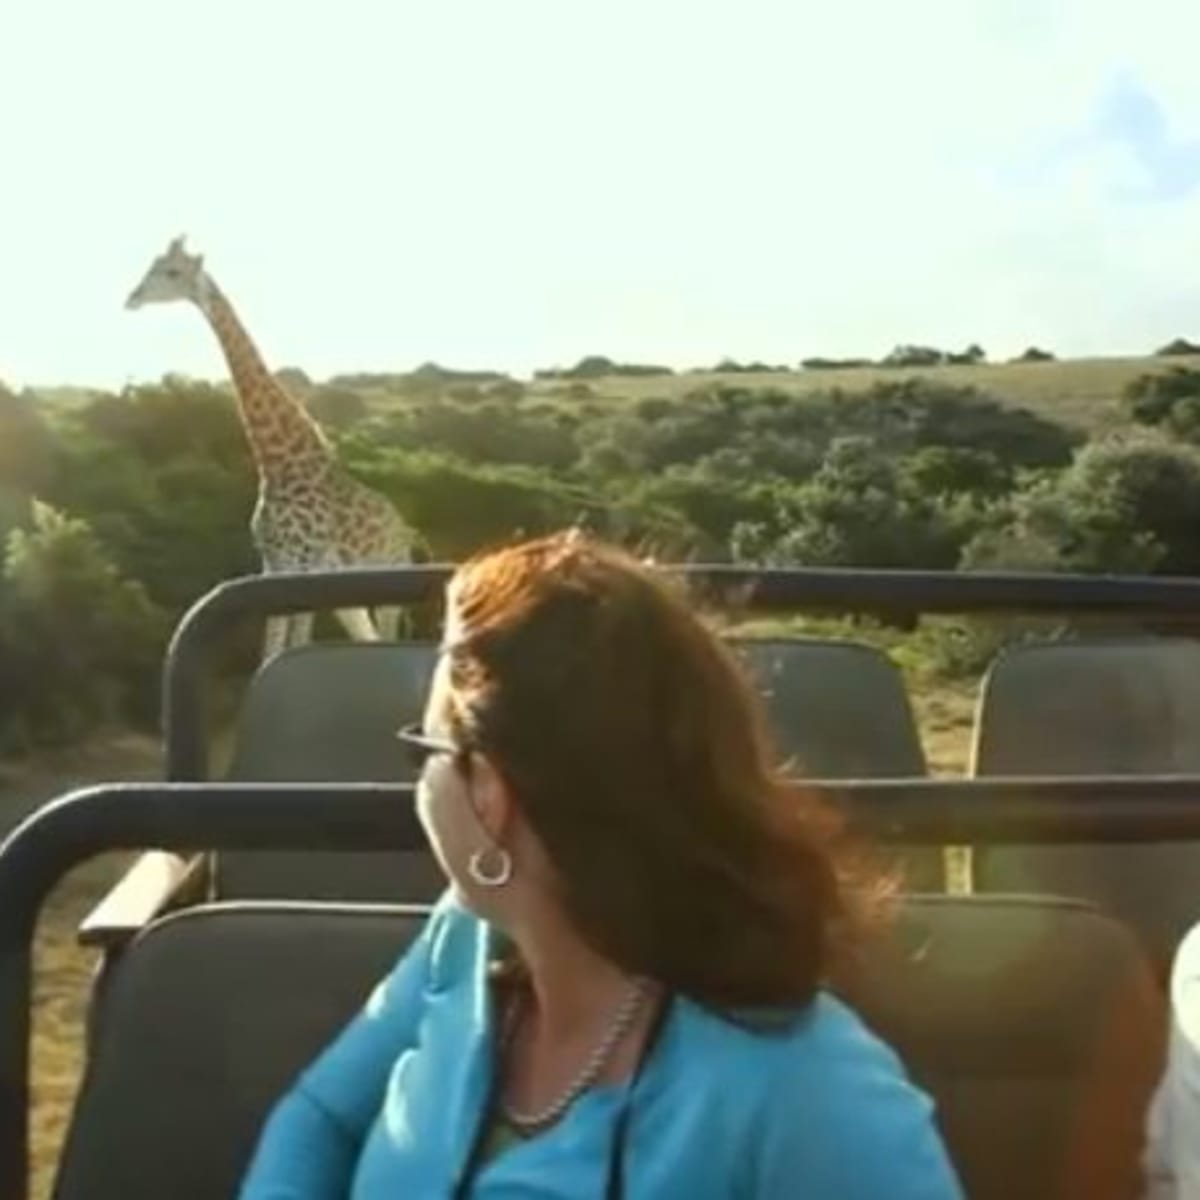 Giraffe attacks jeep safari in South Africa - Men's Journal